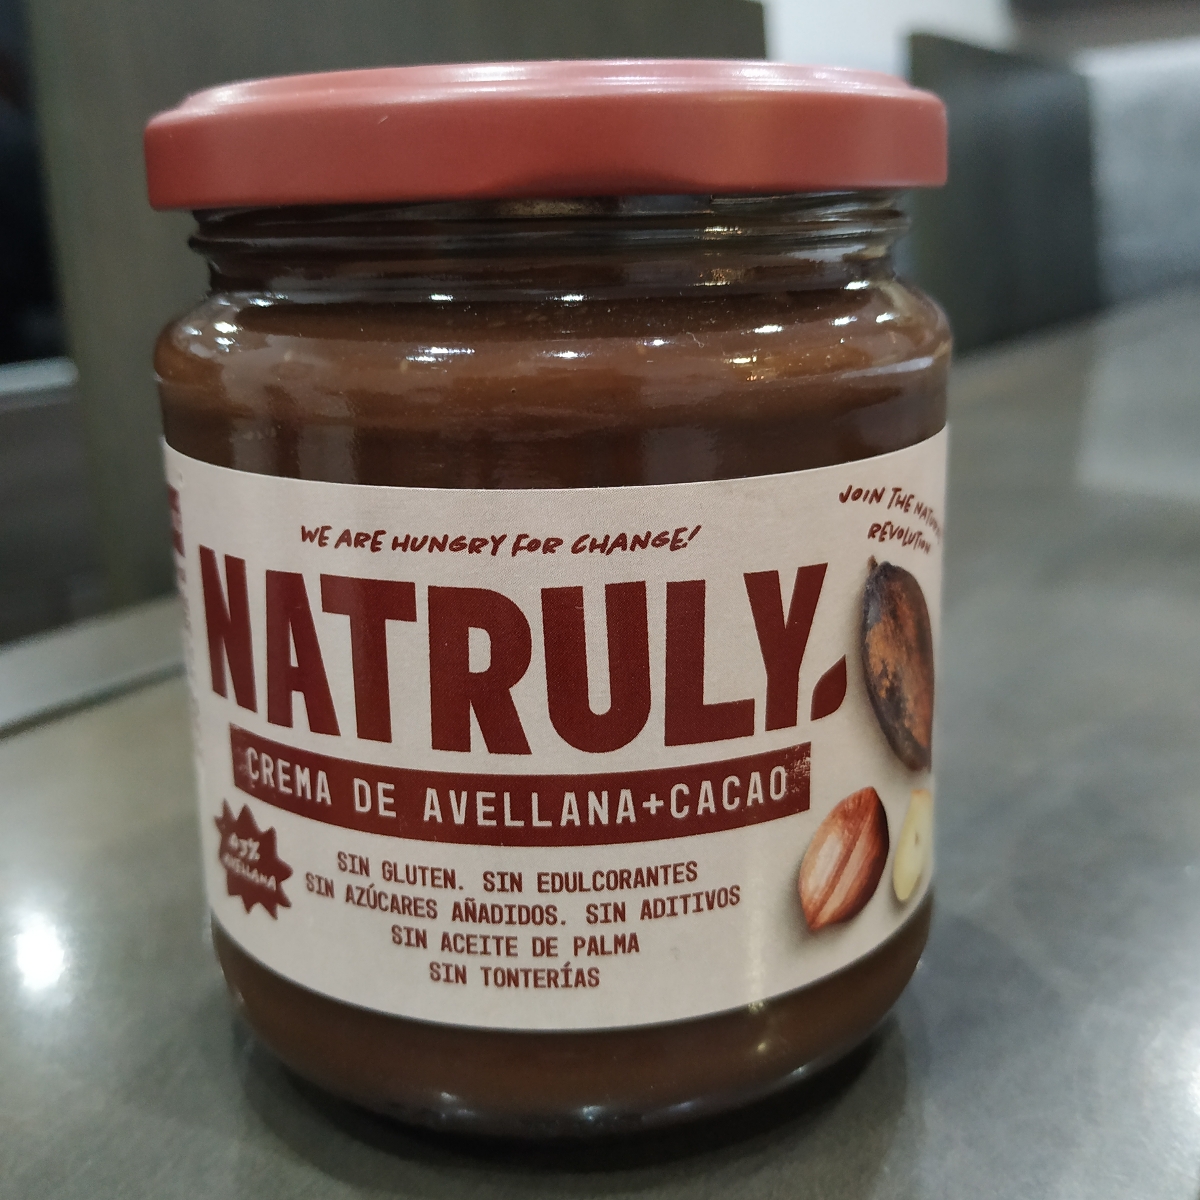 Natruly Crema De Avellana + Cacao Reviews